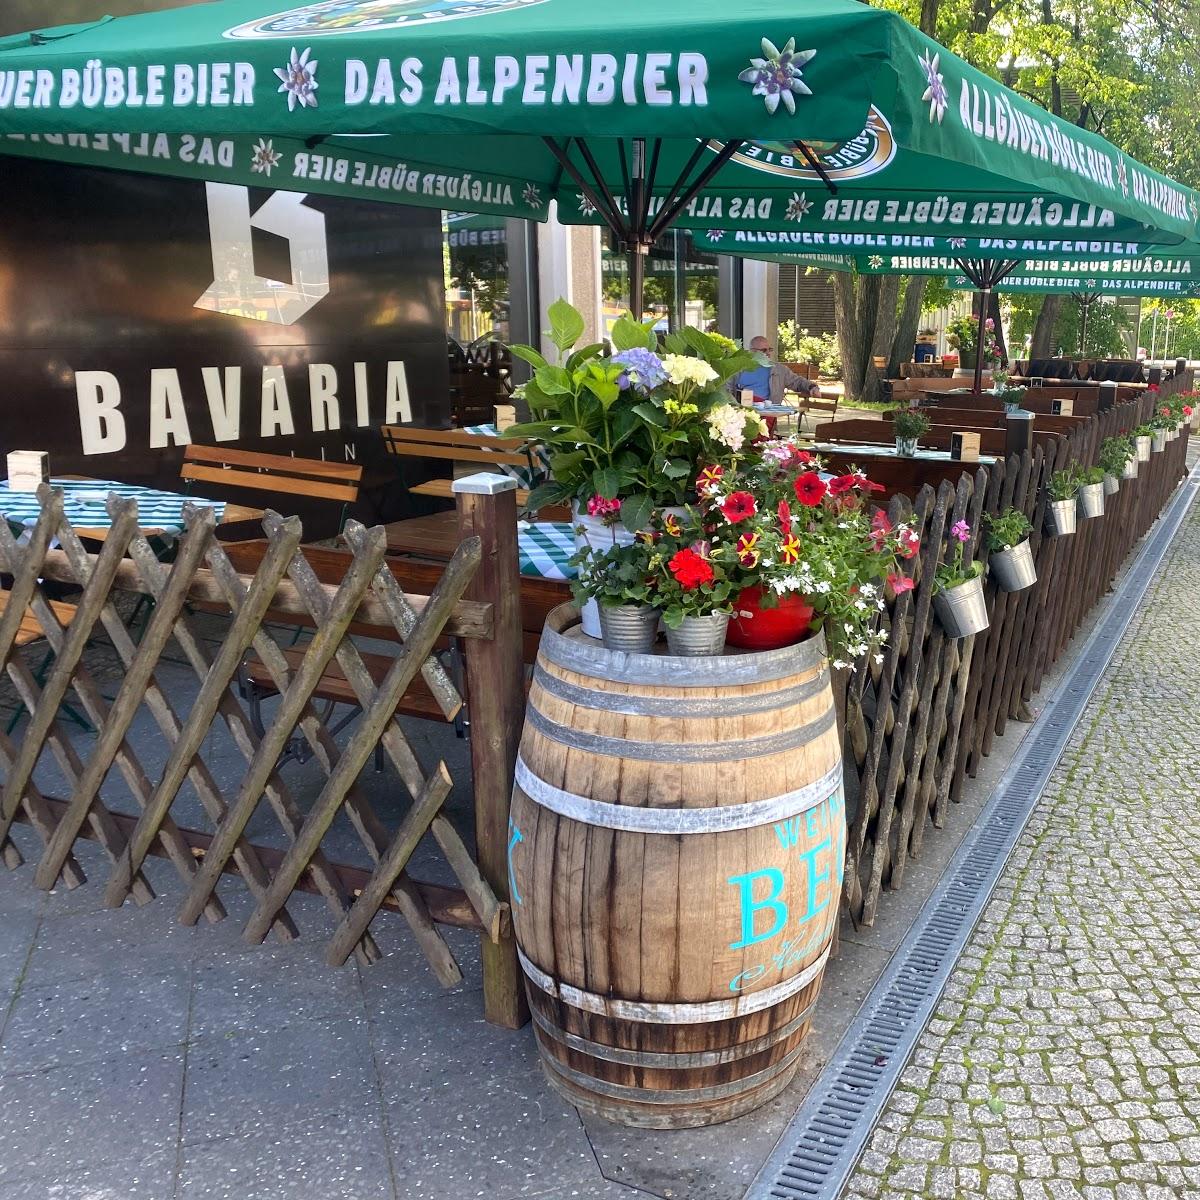 Restaurant "Bavaria Berlin" in Berlin